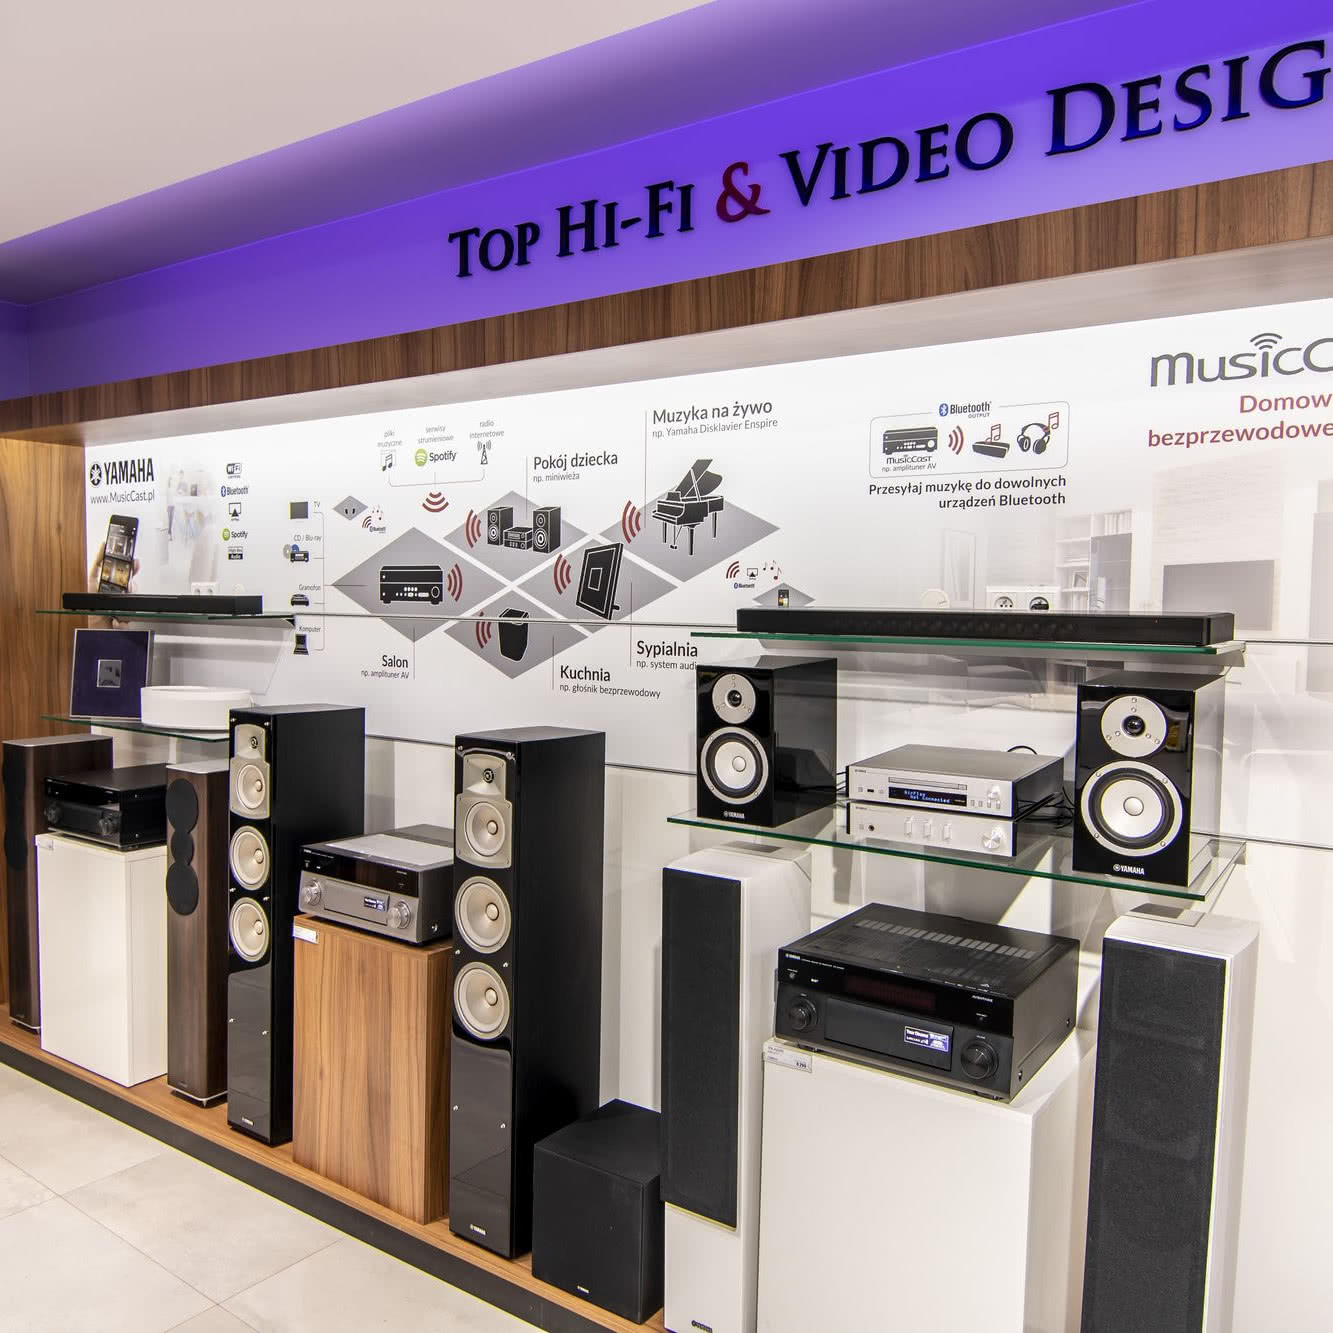 Top Hi-Fi & Video Design otwiera salon Rzeszowie